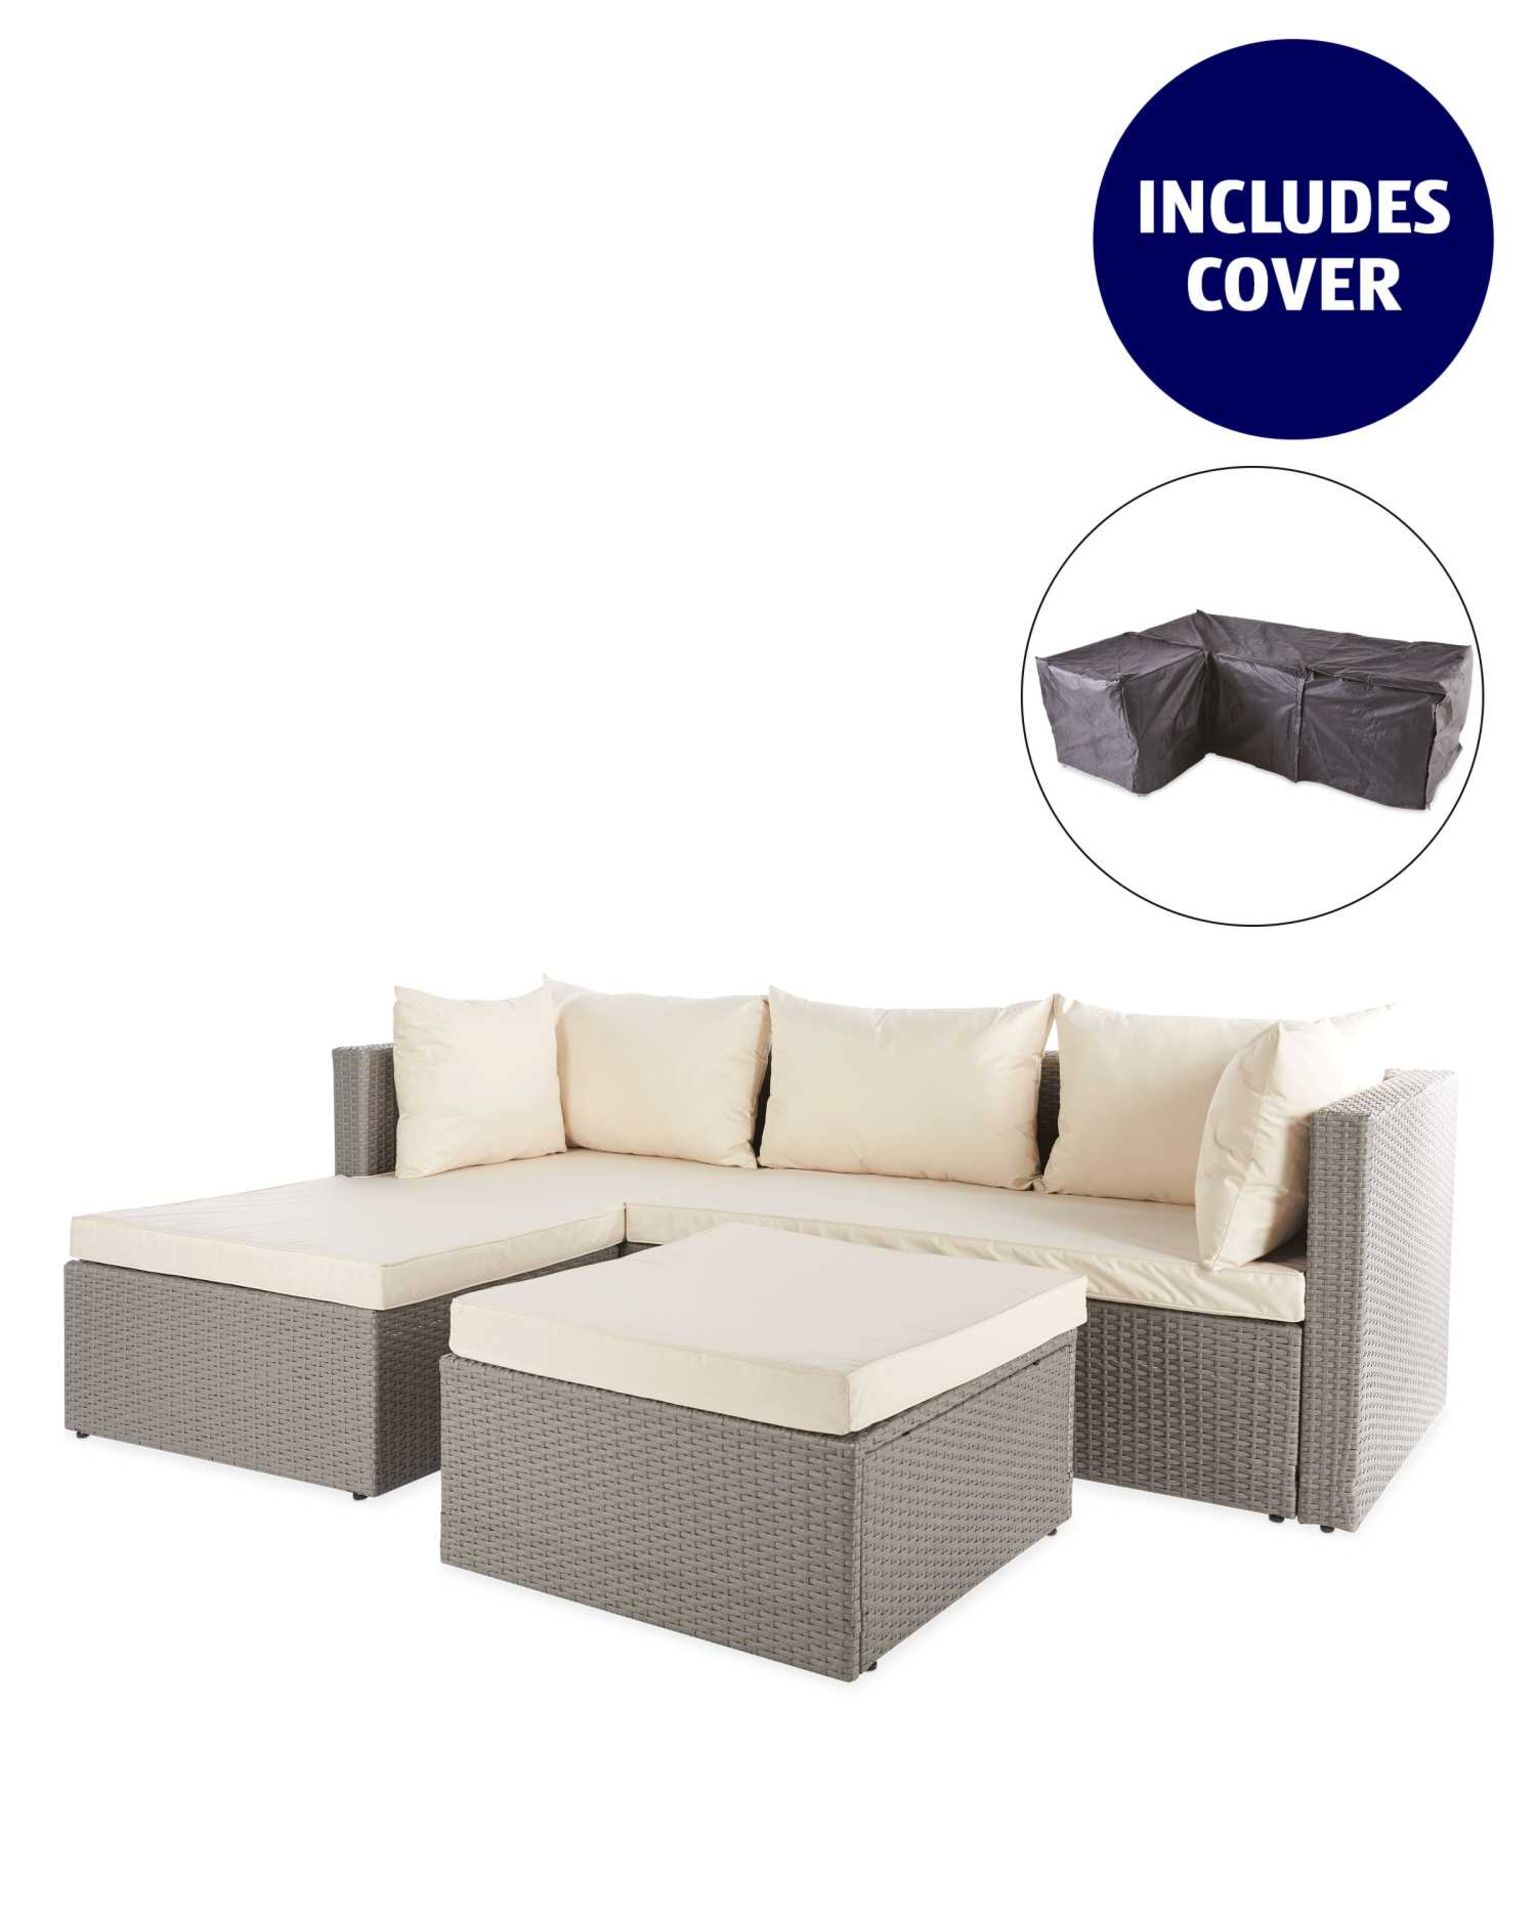 Cream Rattan Corner Sofa & Cover. - ROW16. Soak in the sun and feel that summer breeze while sitting